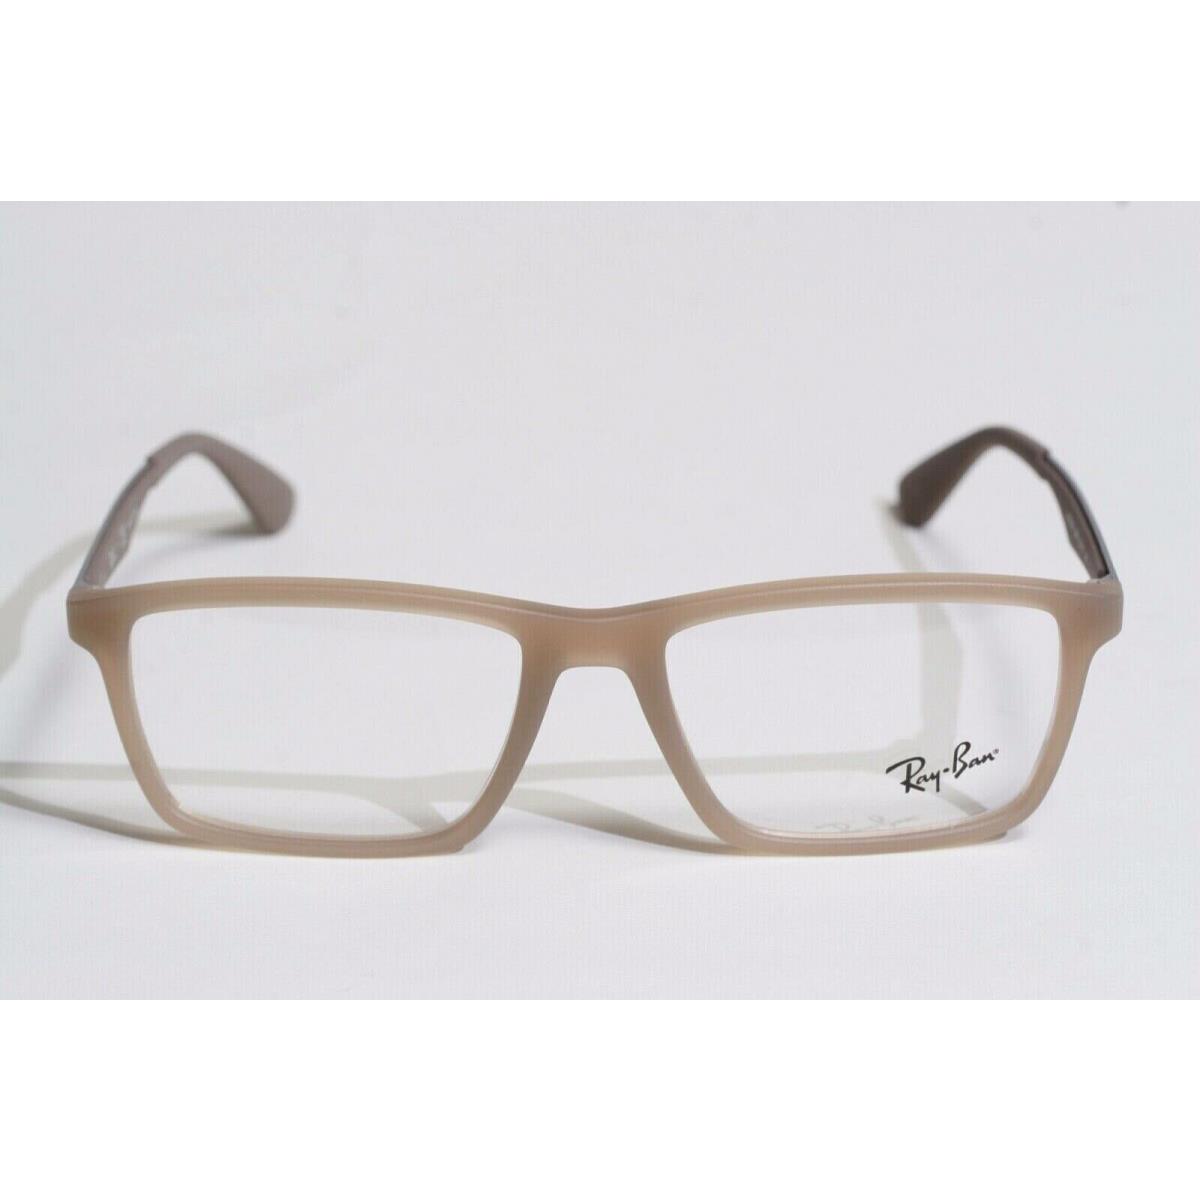 Ray-Ban eyeglasses  - Light Brown Frame 0